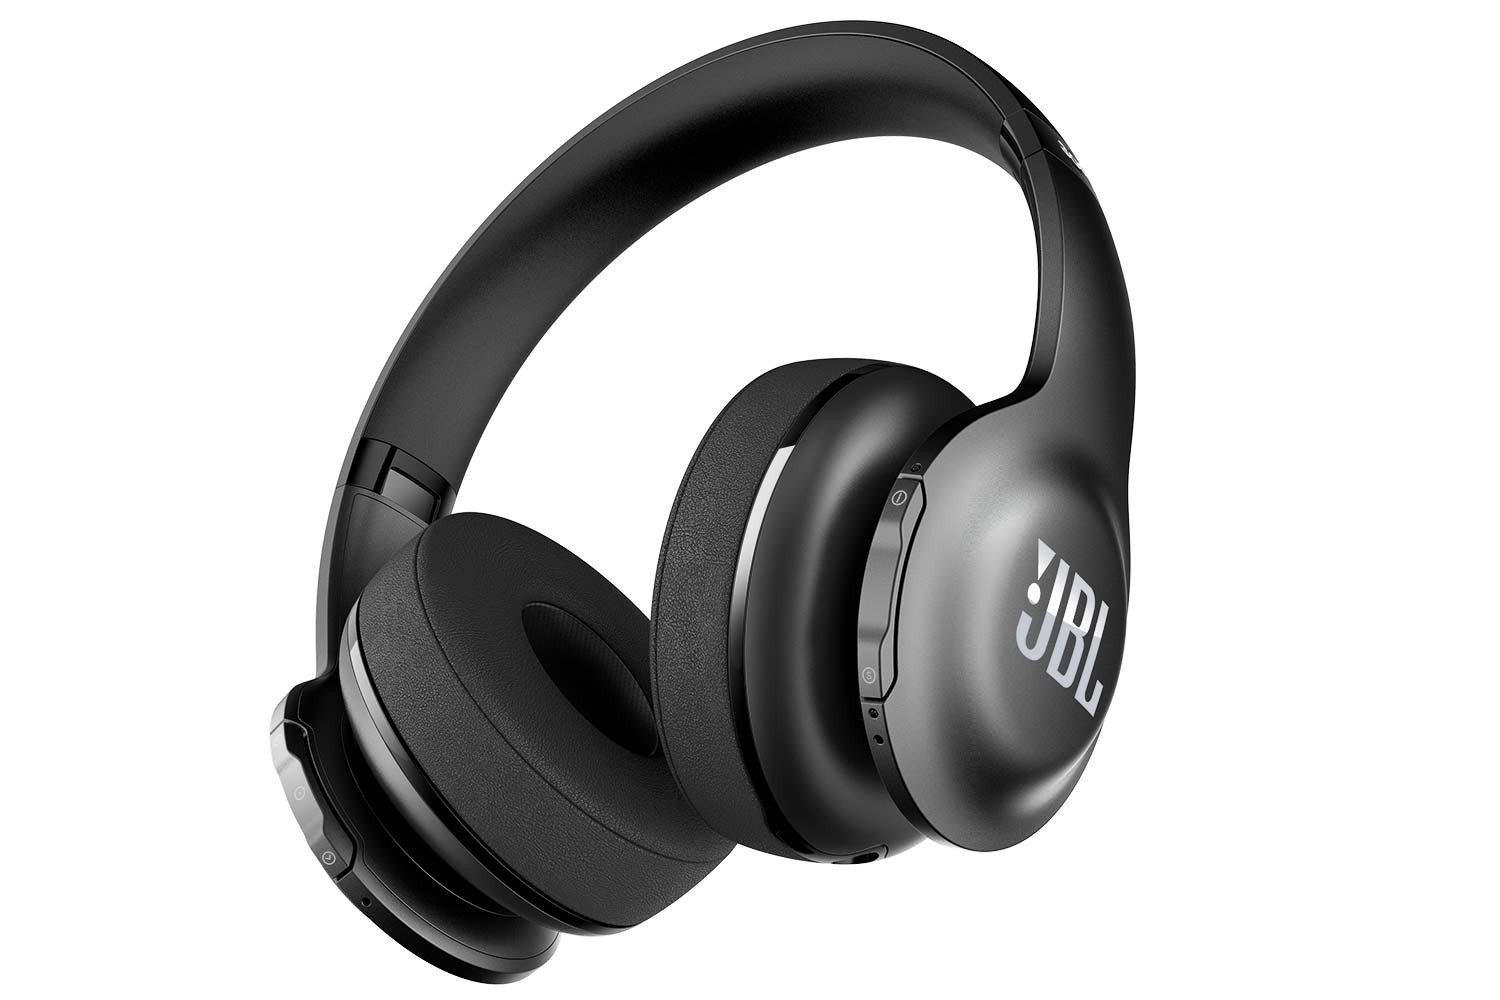 jbl new headphones ifa everest reflect grip noise cancelling bluetooth large 300  oe bt black back